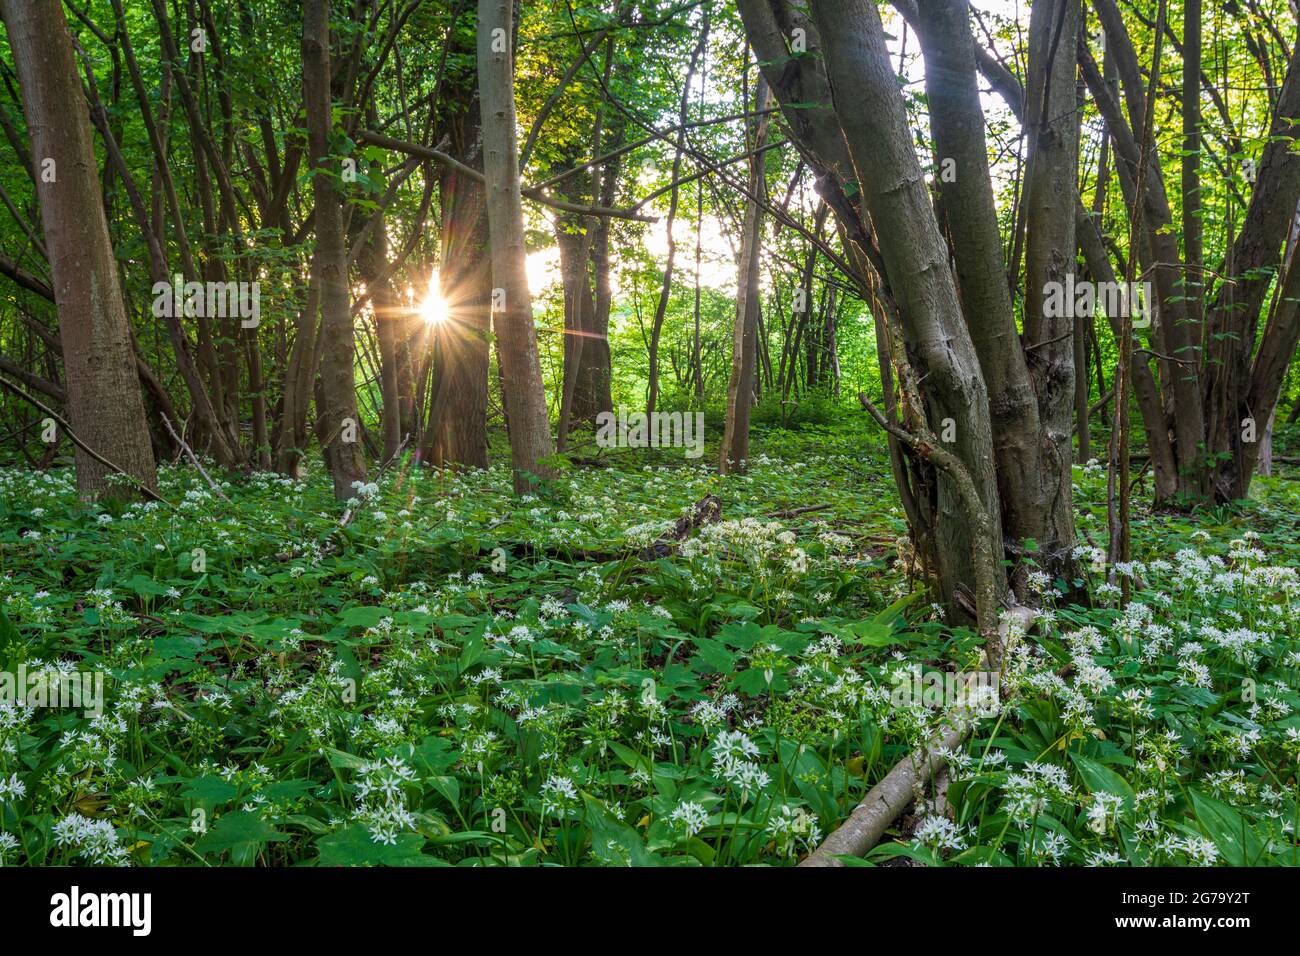 Blooming barlauch allium ursinum in nationalpark donauauen hi-res stock  photography and images - Alamy